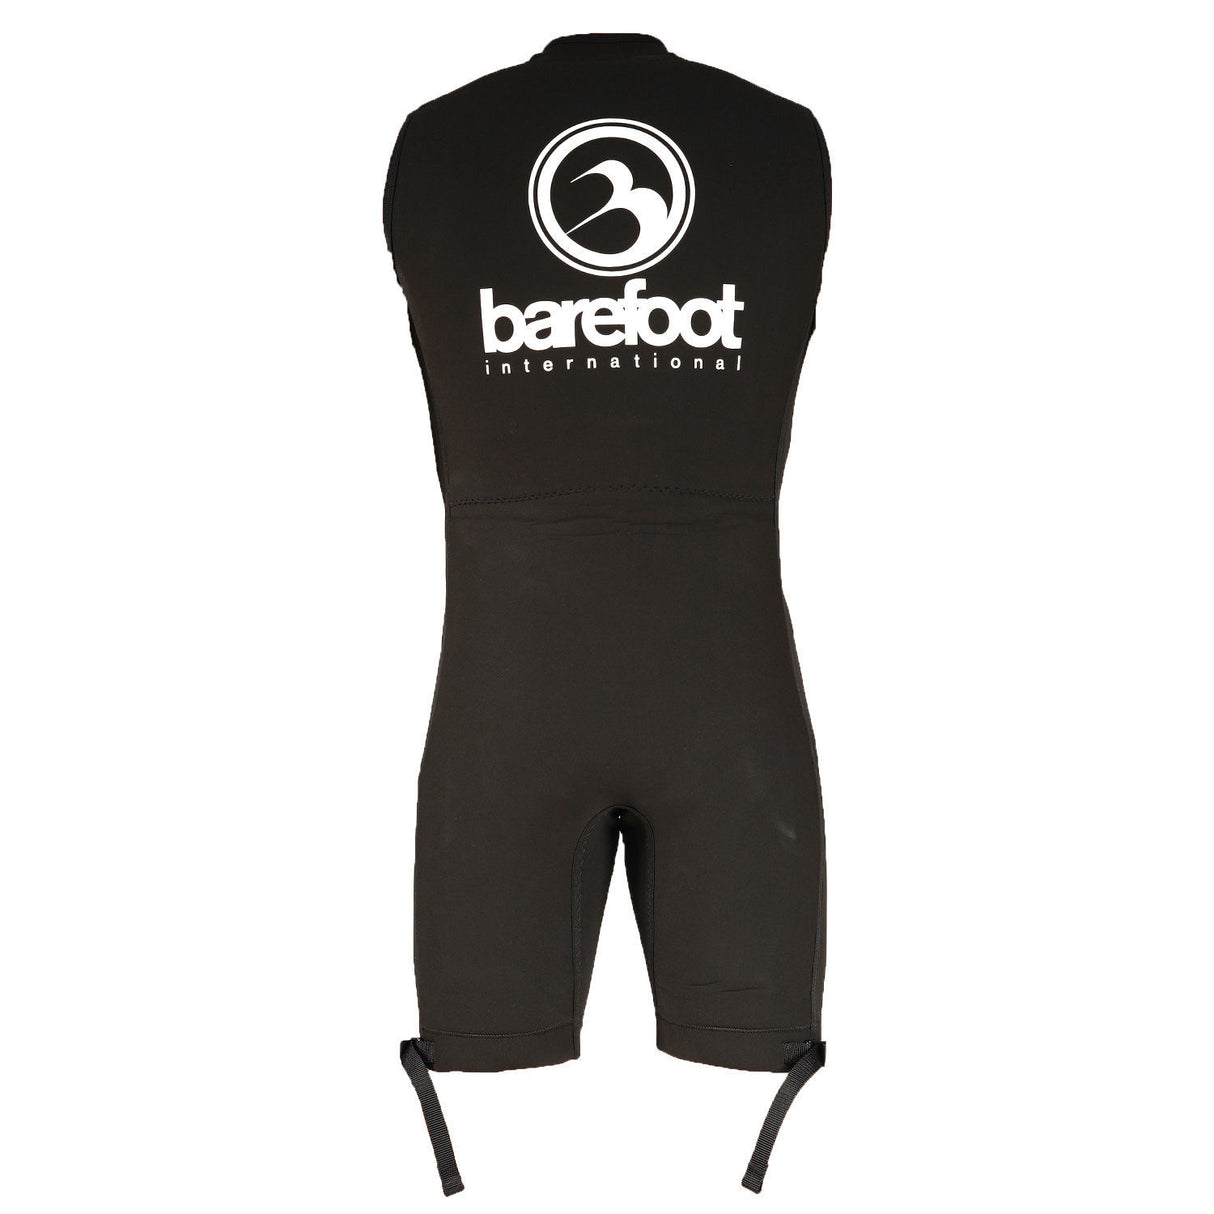 Barefoot International Iron Sleeveless Barefoot Suit